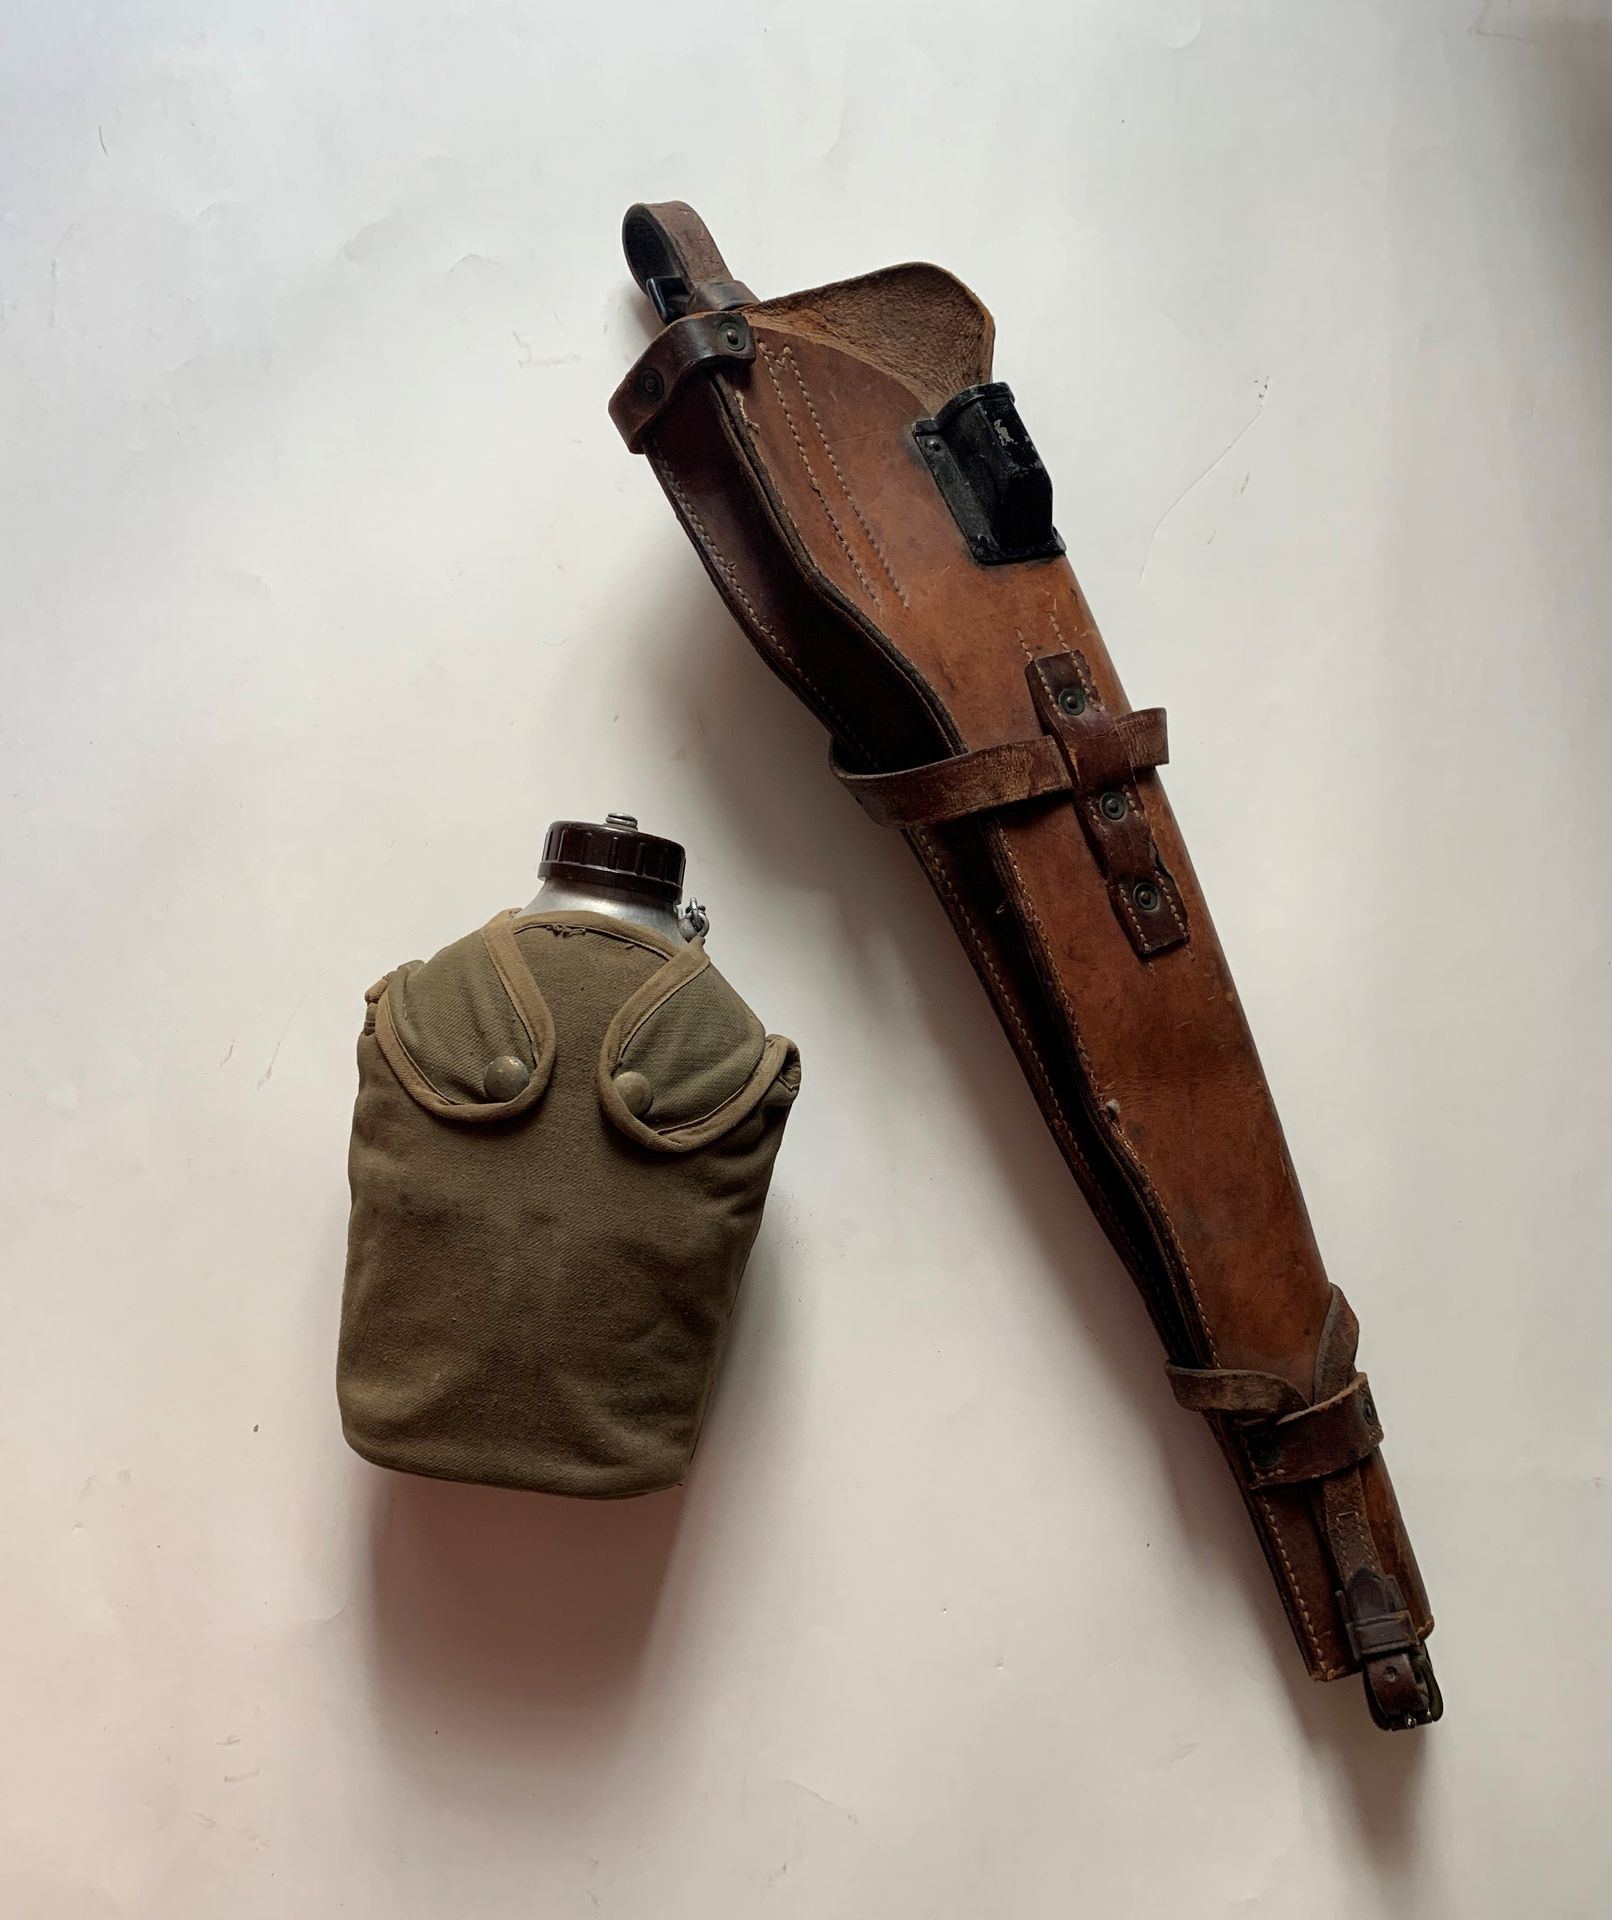 Null 美国M1步枪的棕色皮套。
有带子和扣环。
标有 "US FROEHLICH Co 1943 "
B.E. 2nd GM
。
 
附有一个烧瓶。